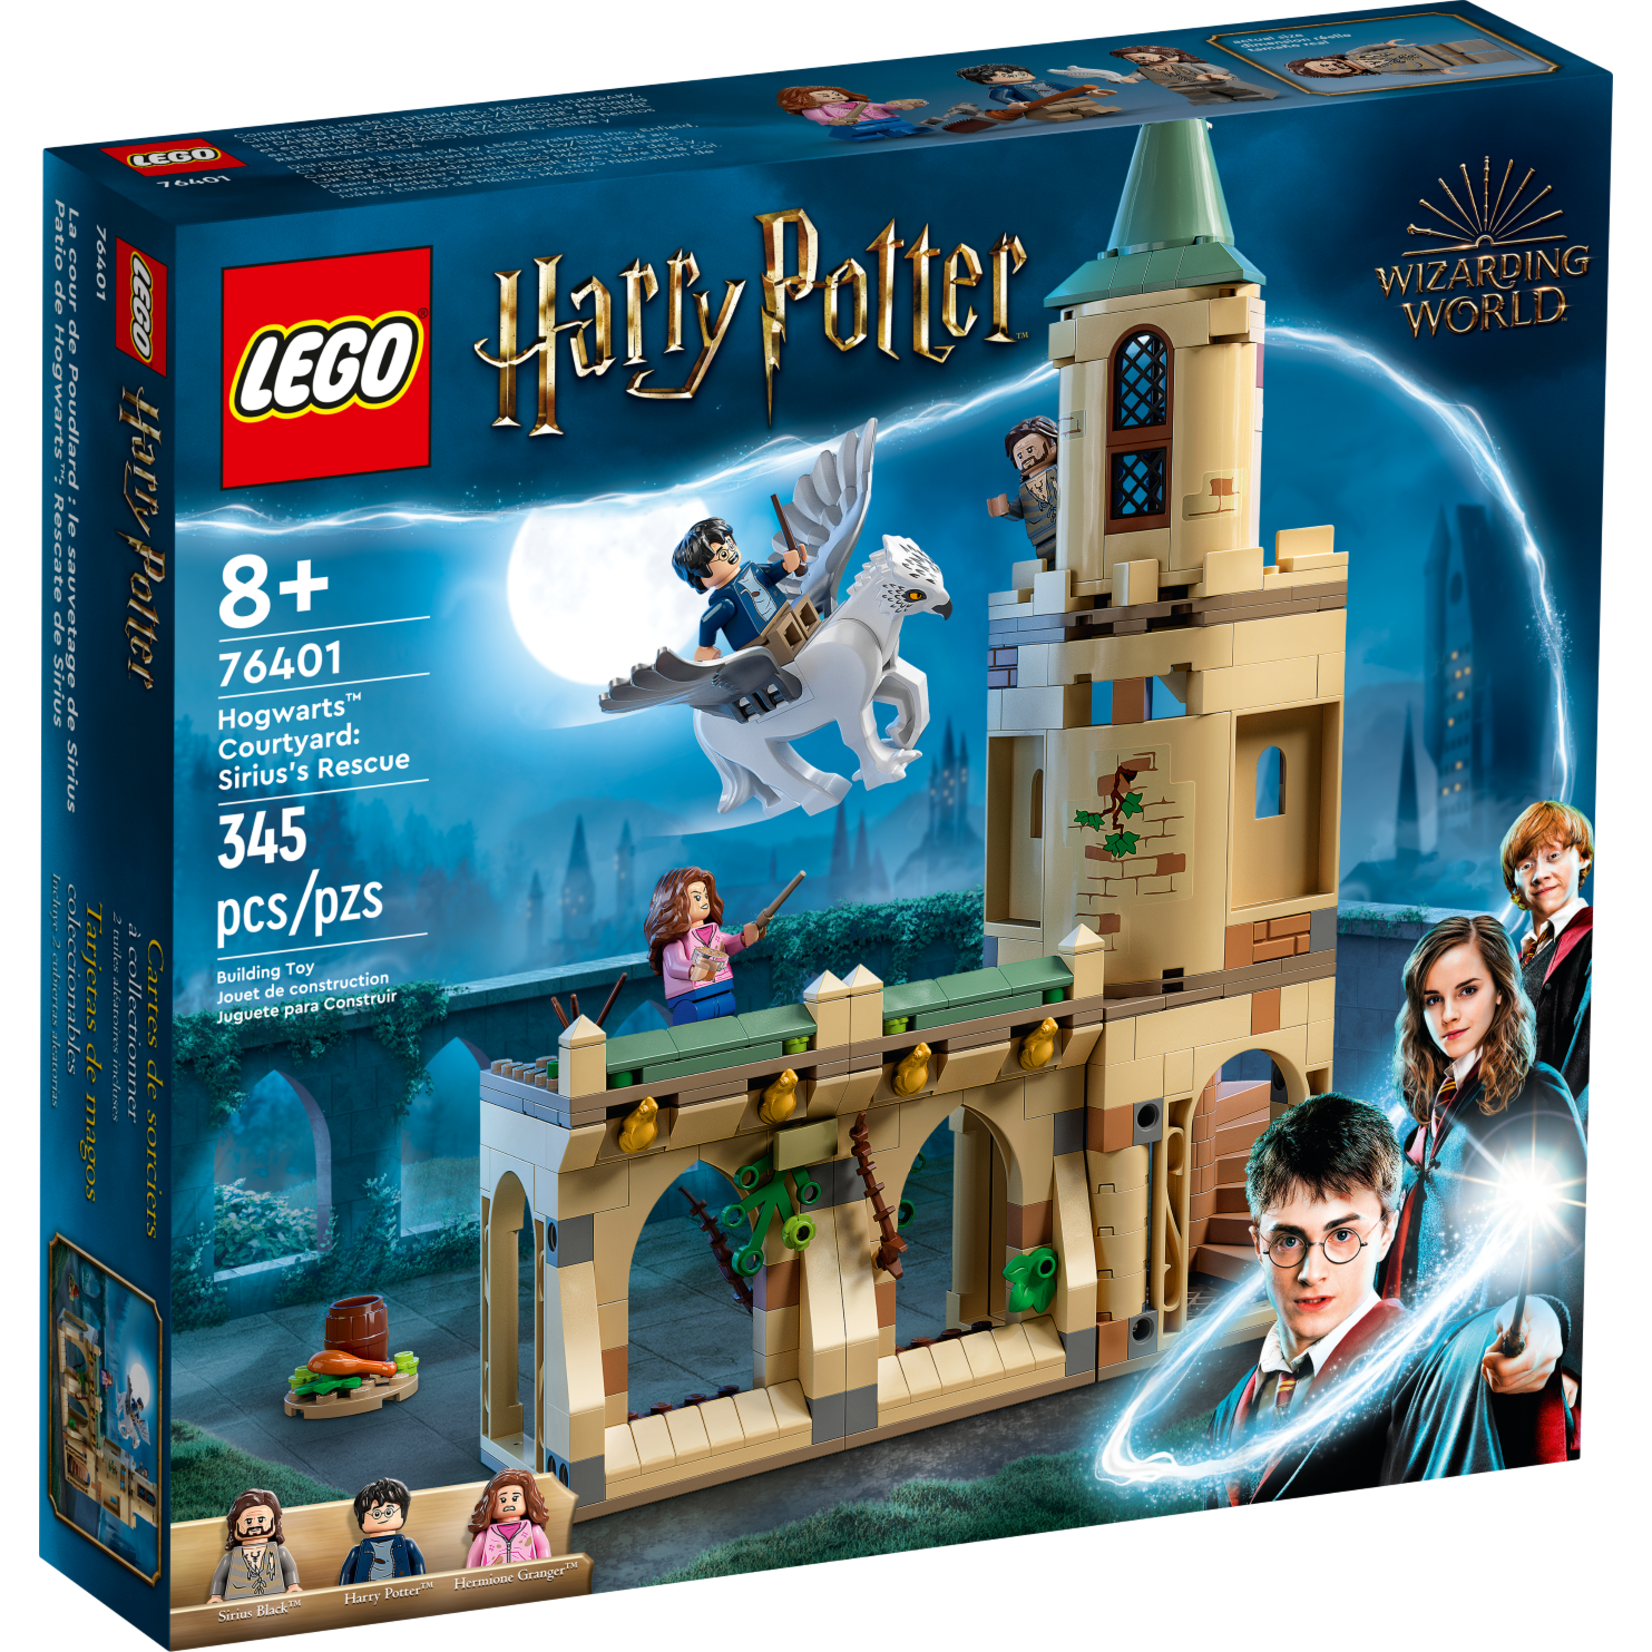 LEGO LEGO Harry Potter Hogwarts Courtyard: Sirius’s Rescue 76401